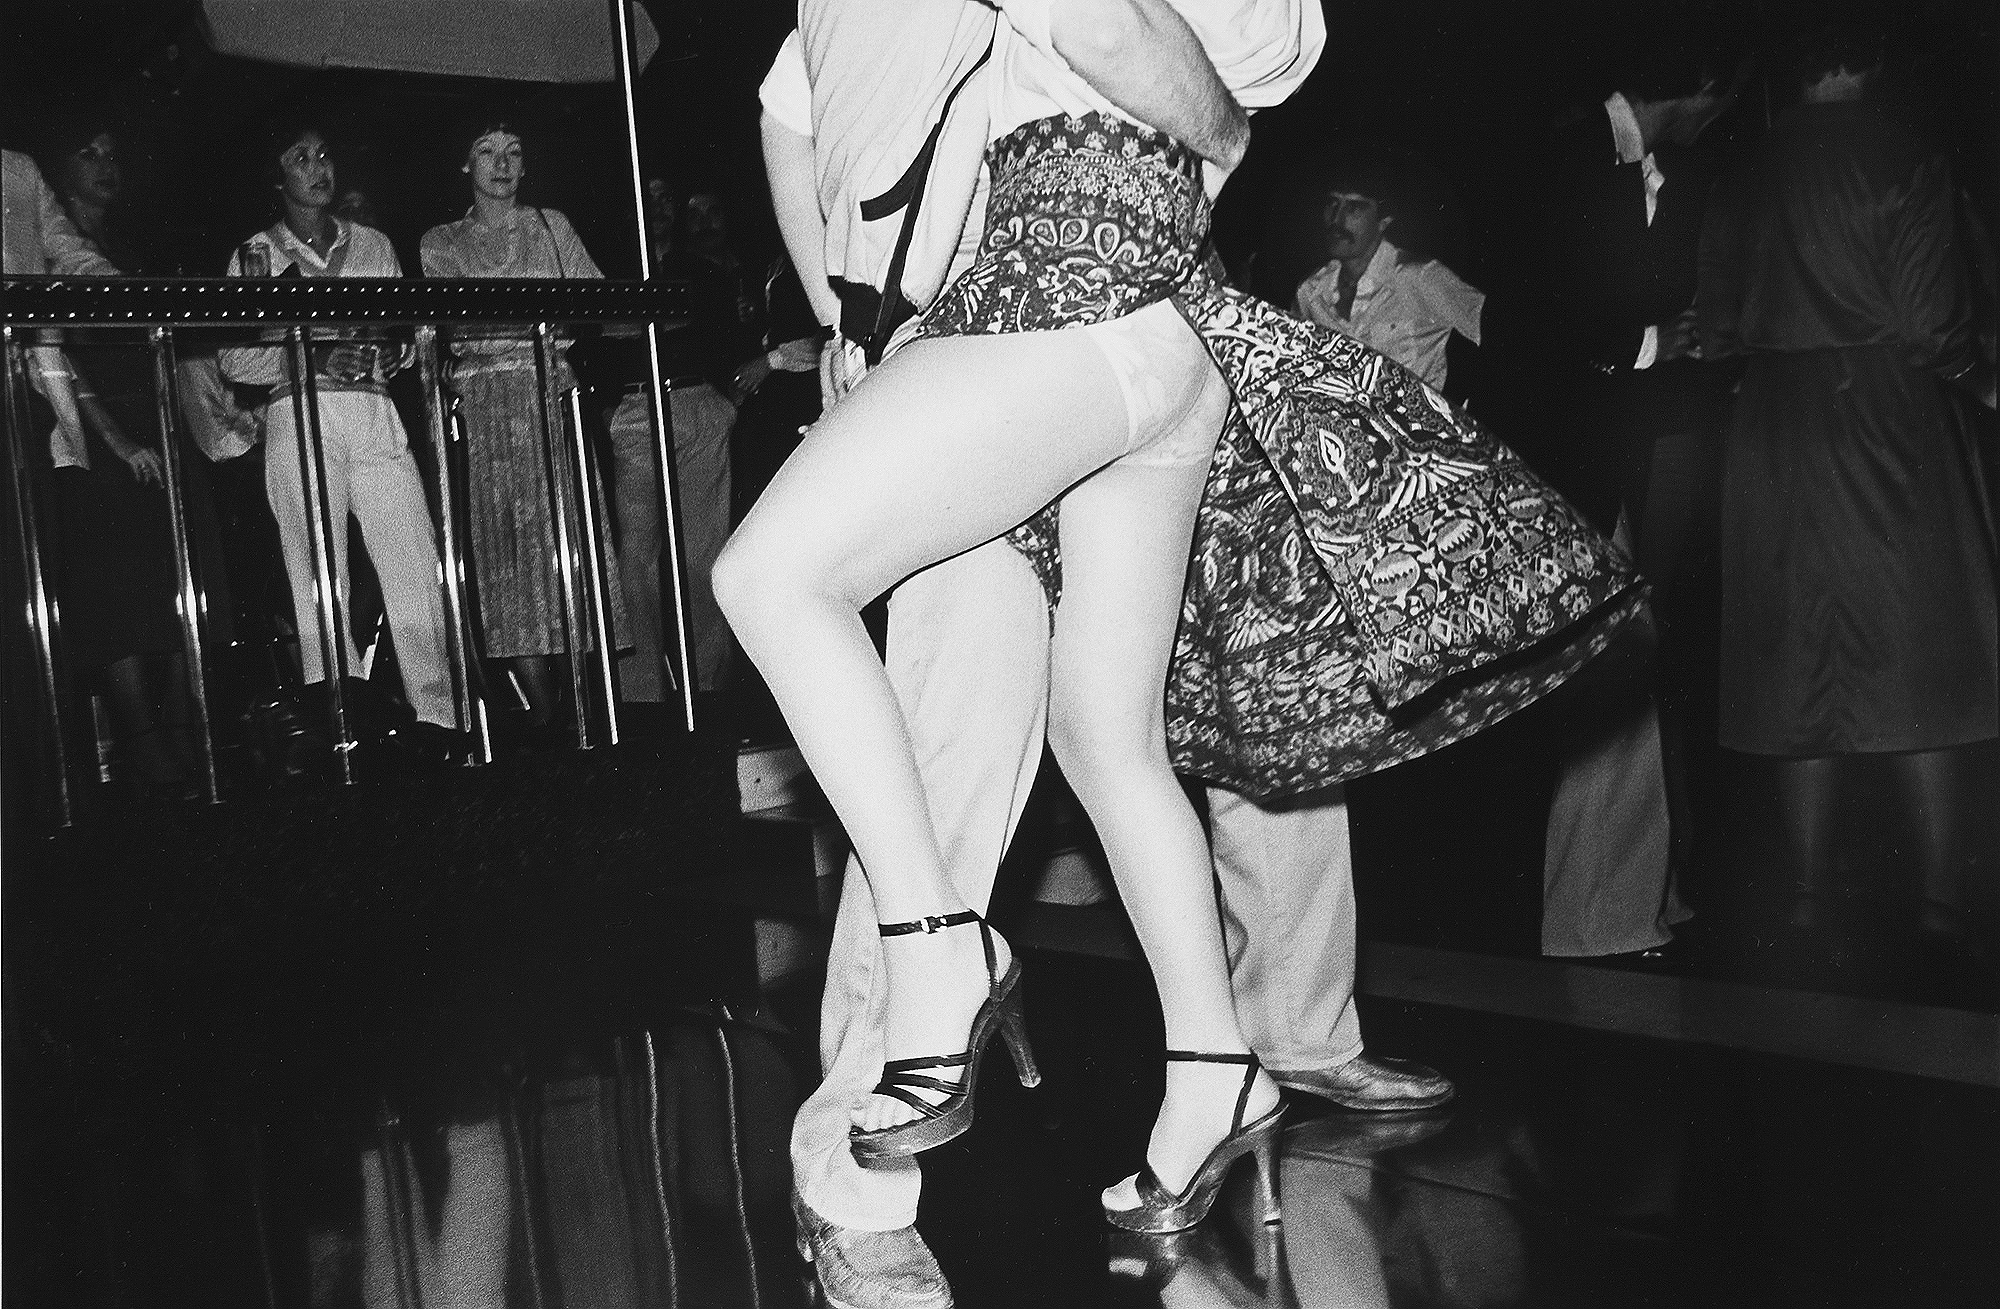 Tony_Ward_photography_early_work_Night_Fever_portfolio_1970's_erotic_dirty_dancing_couples_grinding_upskirt_panties